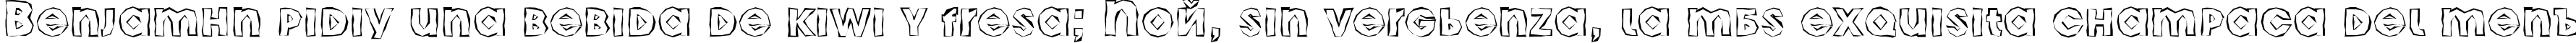 Пример написания шрифтом a_AvanteCpsLCBrkHll текста на испанском